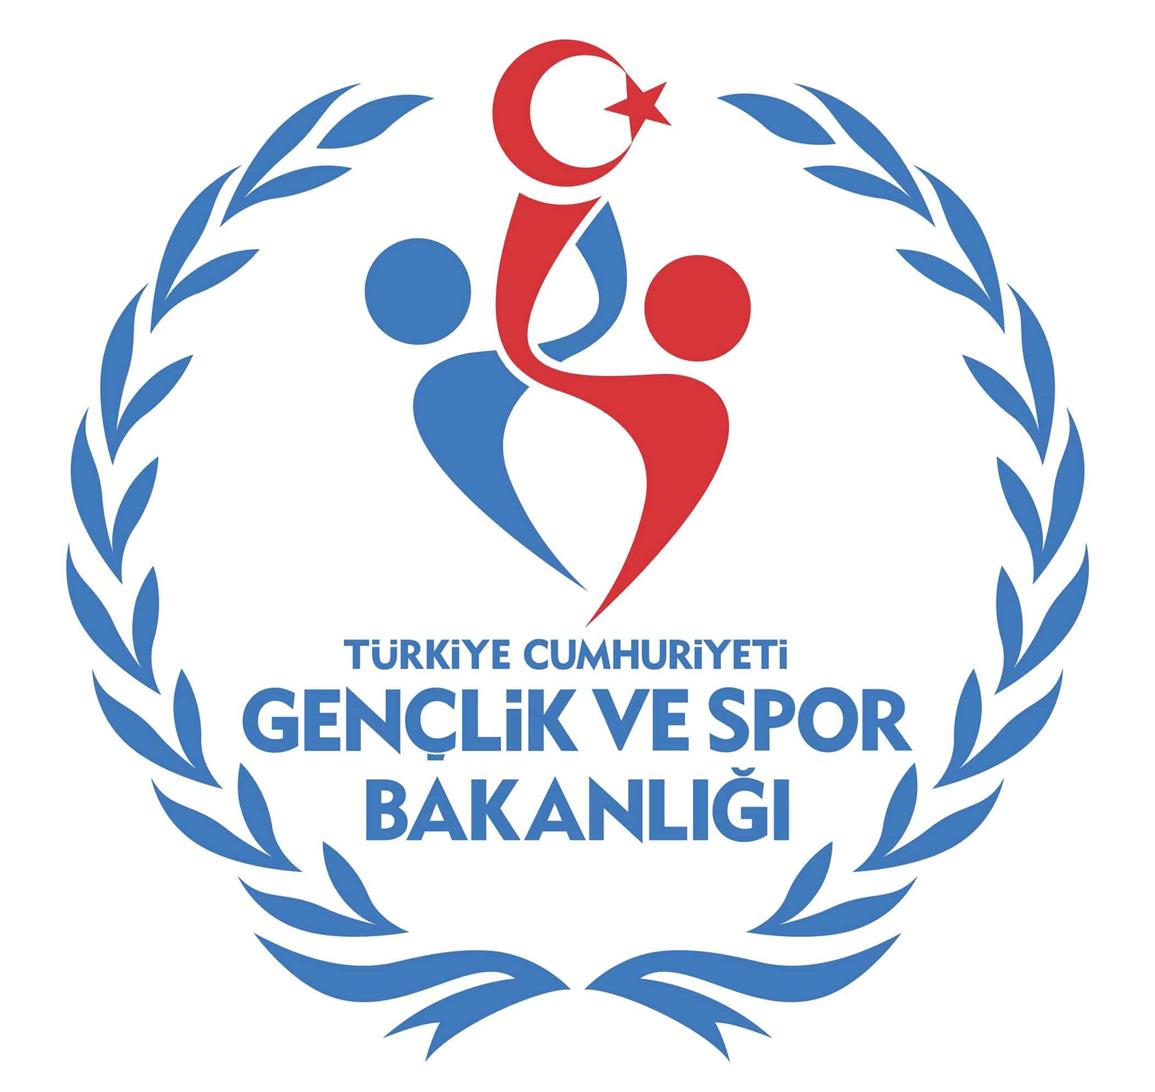 genclik ve spor bakanligi logo